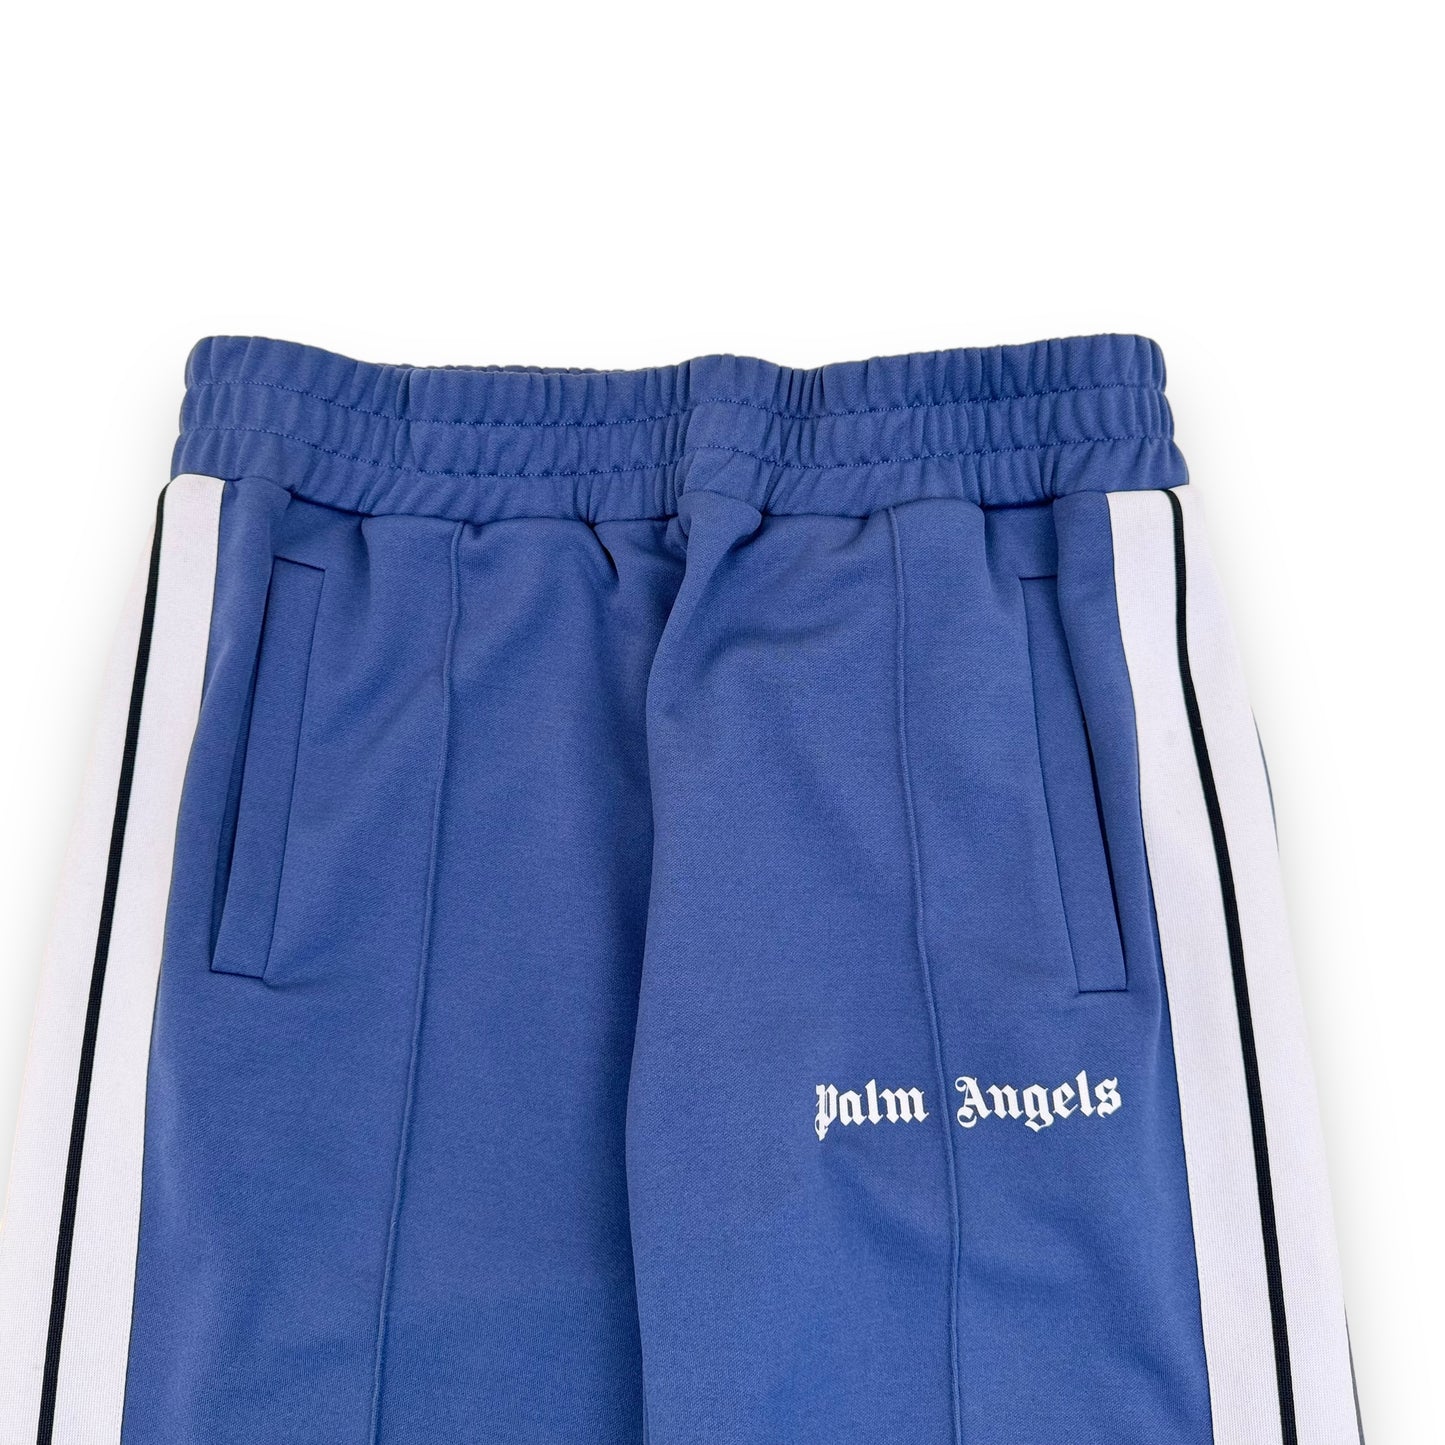 PALM ANGELS CLASSIC TRACK PANTS NAVY XL